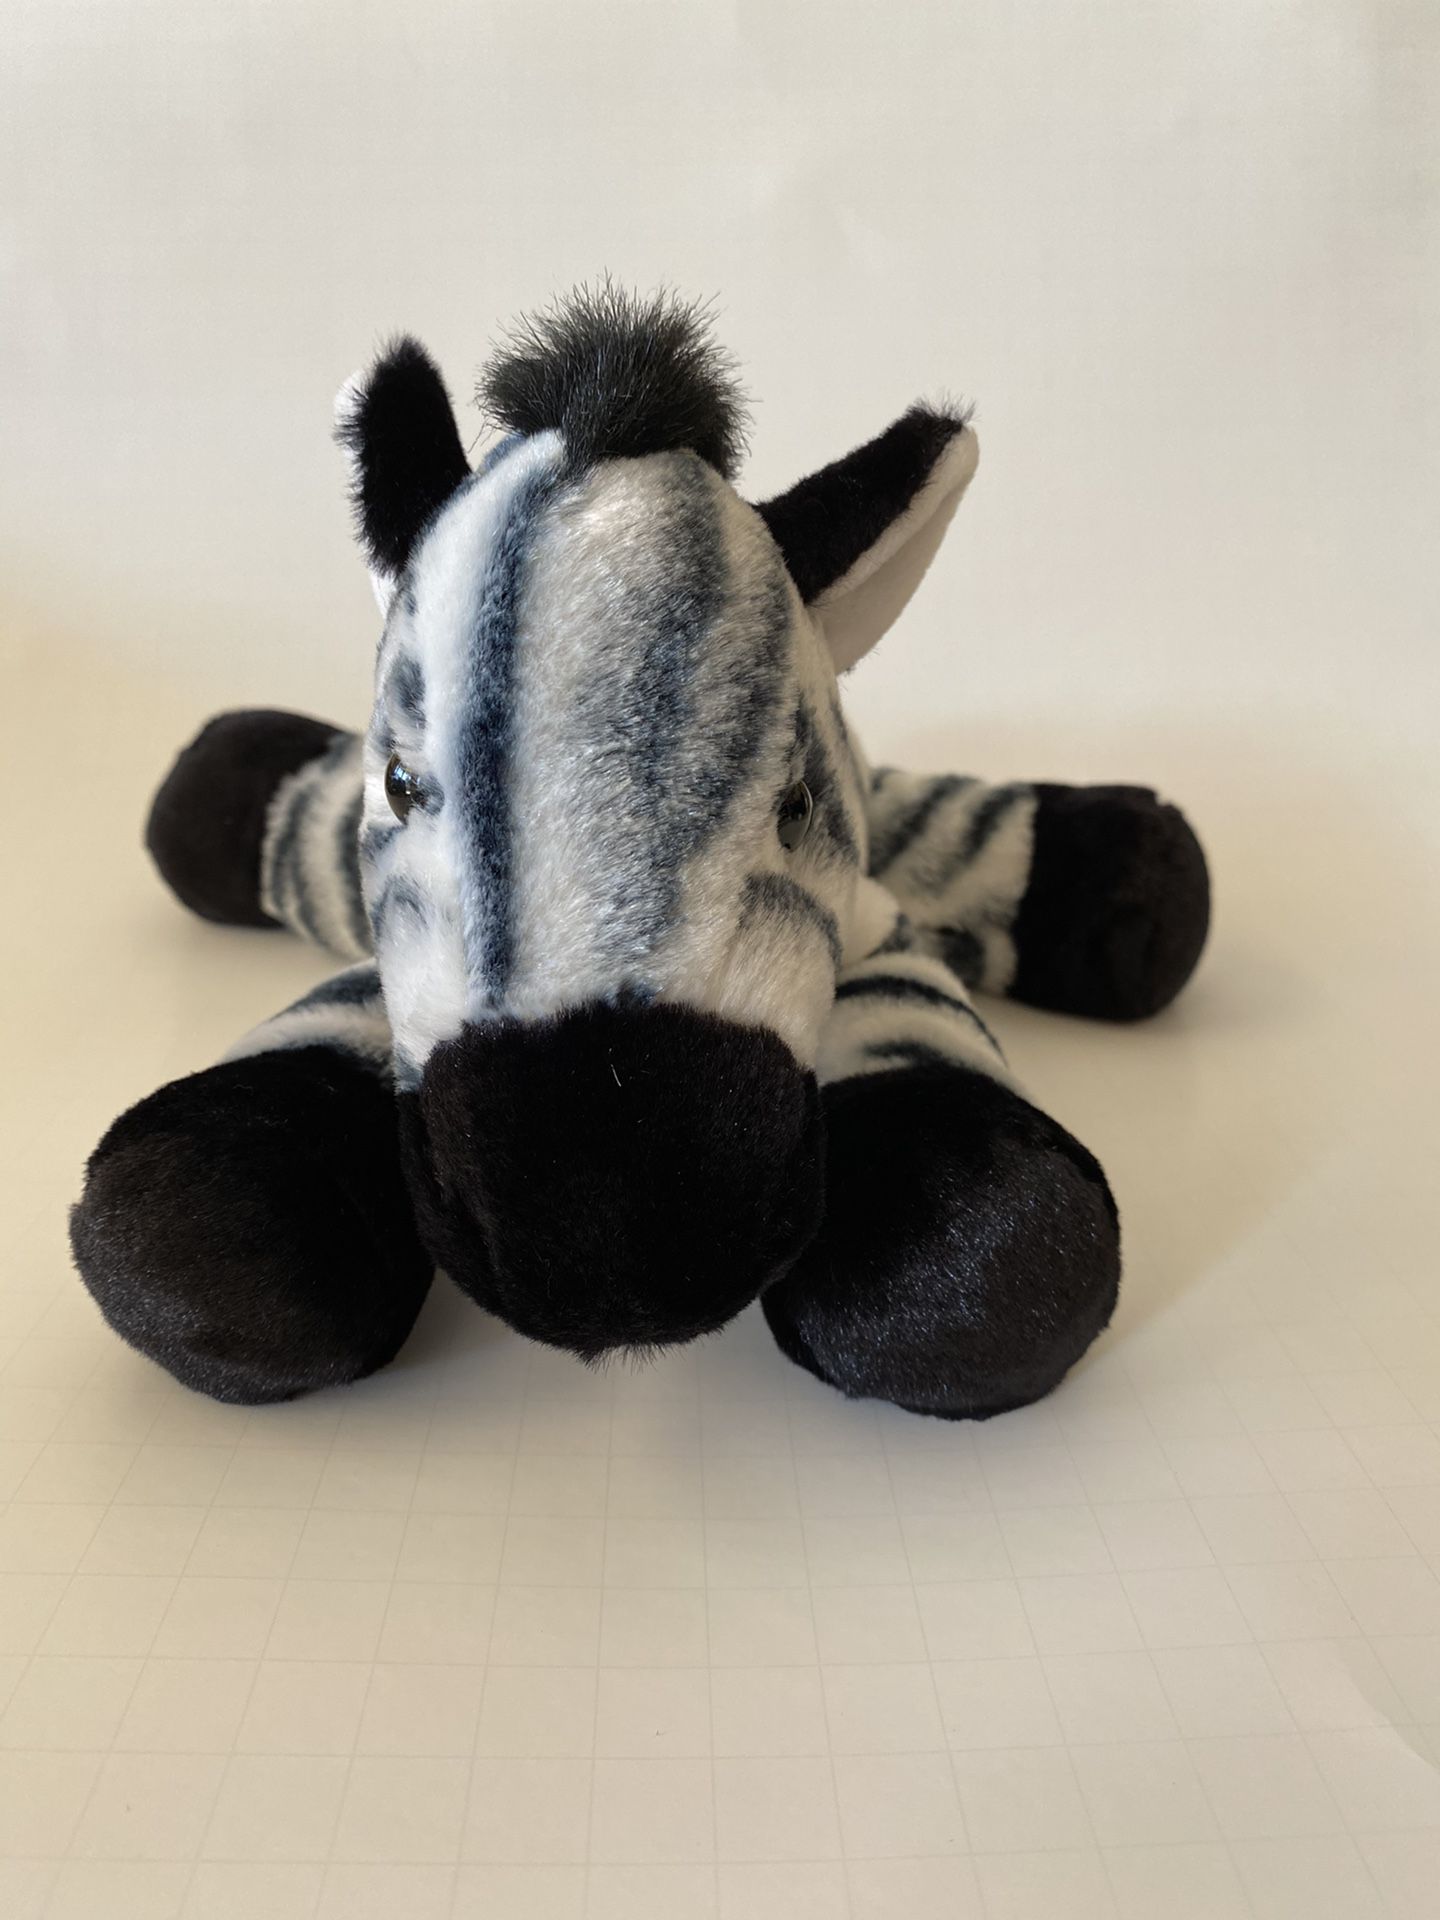 Stuffed animal zebra. Aurora